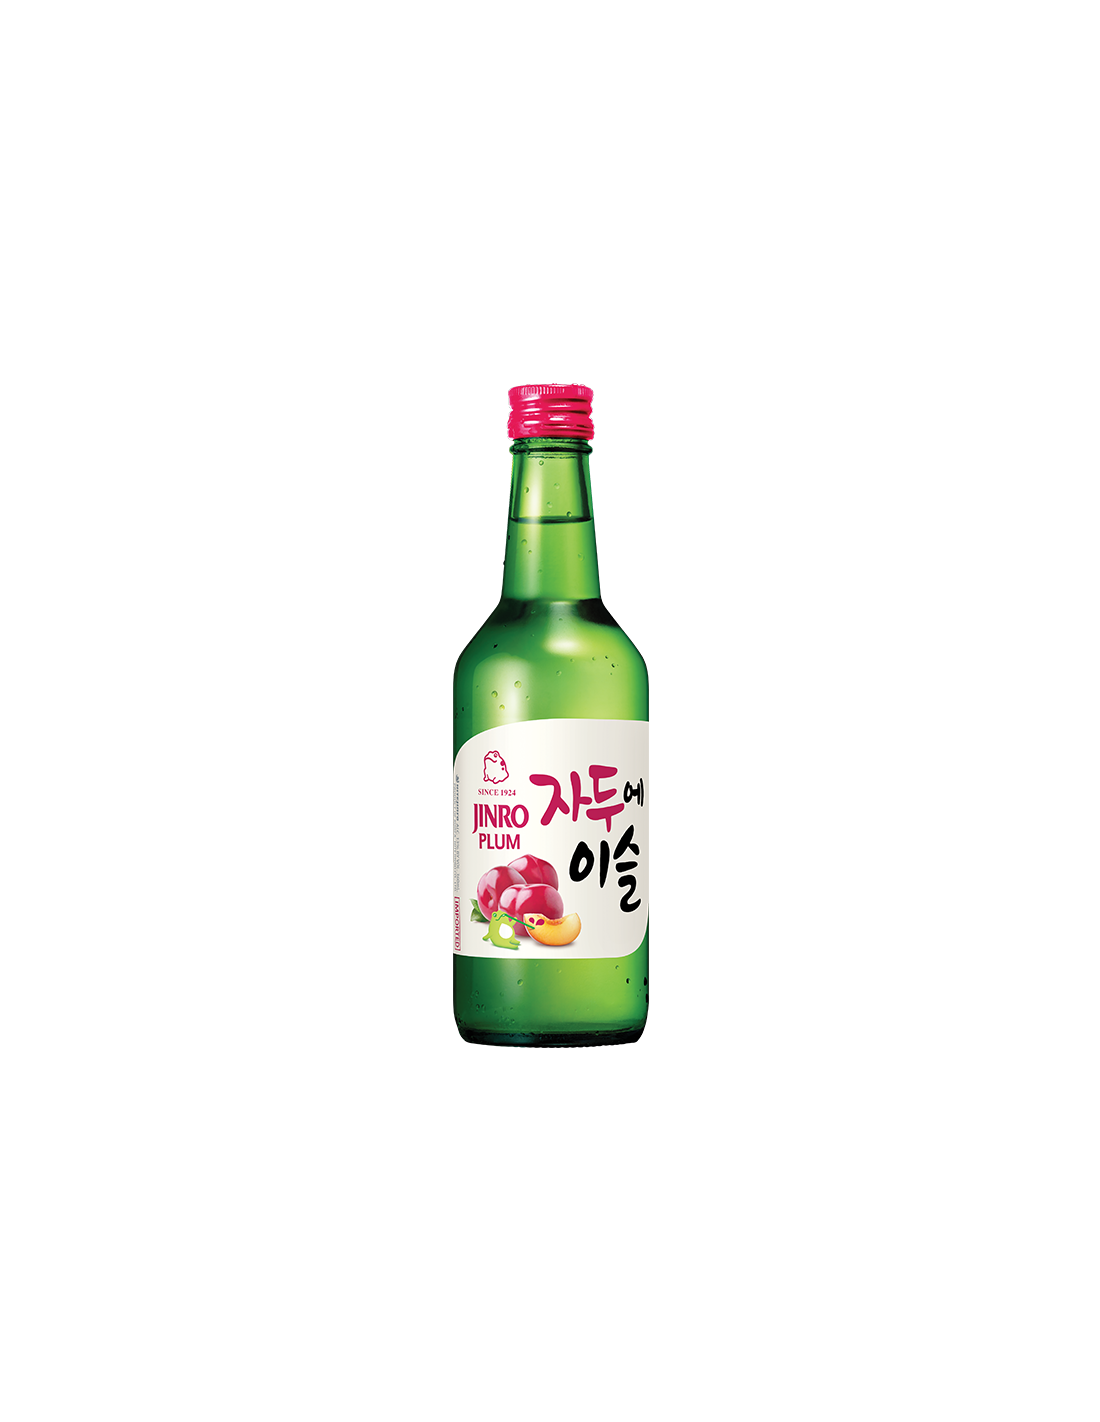 Bautura traditionala Jinro Soju Plum, 13% alc., 0.36L, Coreea alcooldiscount.ro